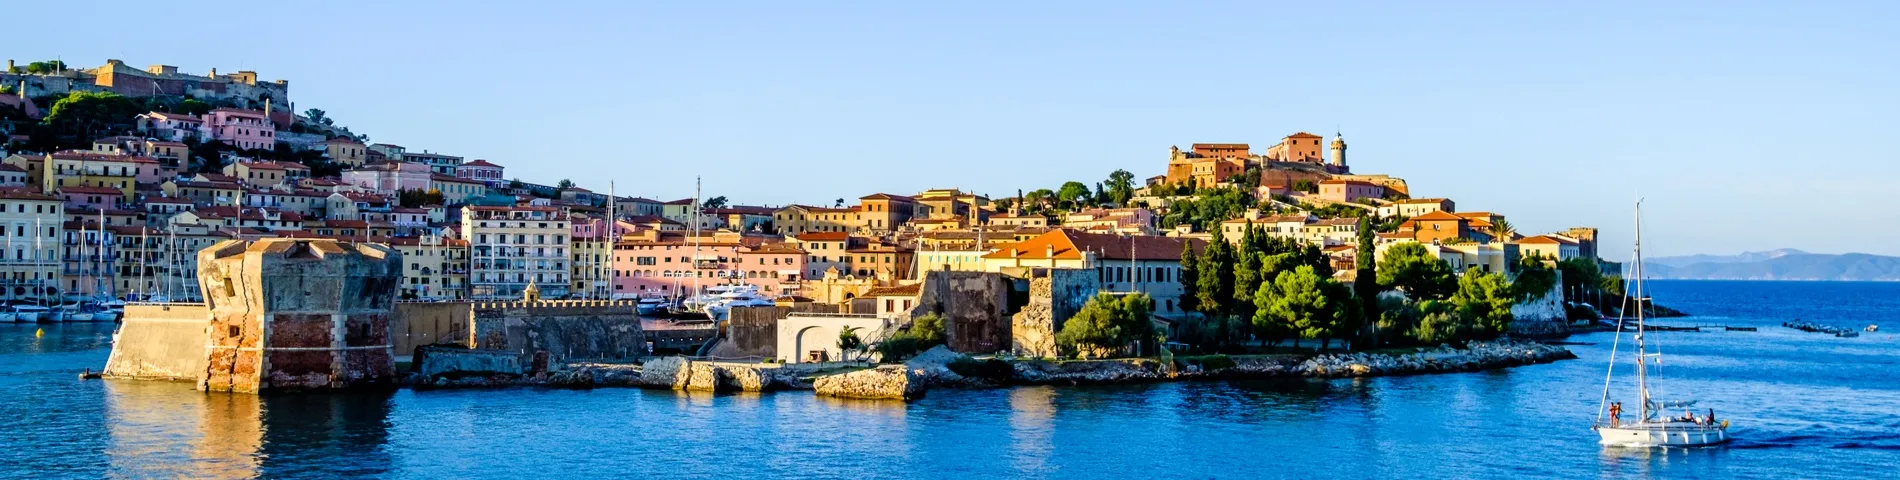 Elba sziget - 